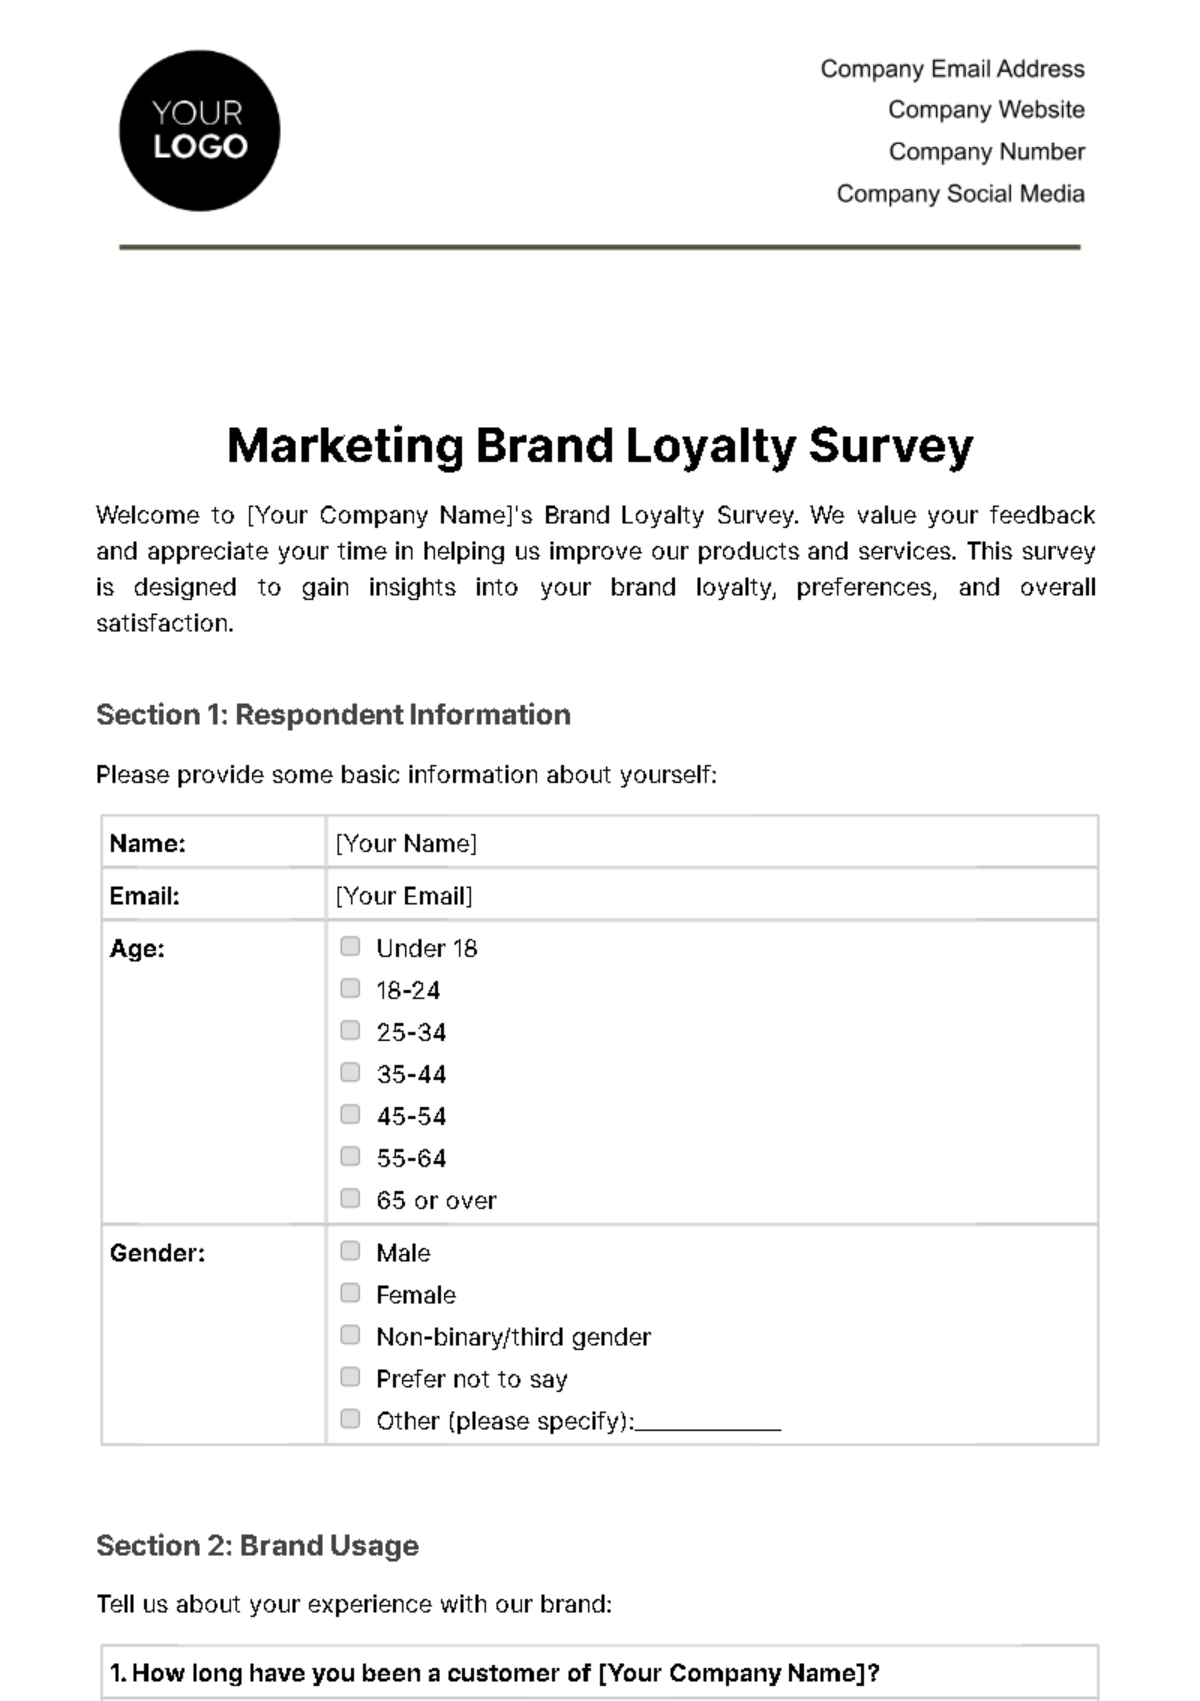 Marketing Brand Loyalty Survey Template